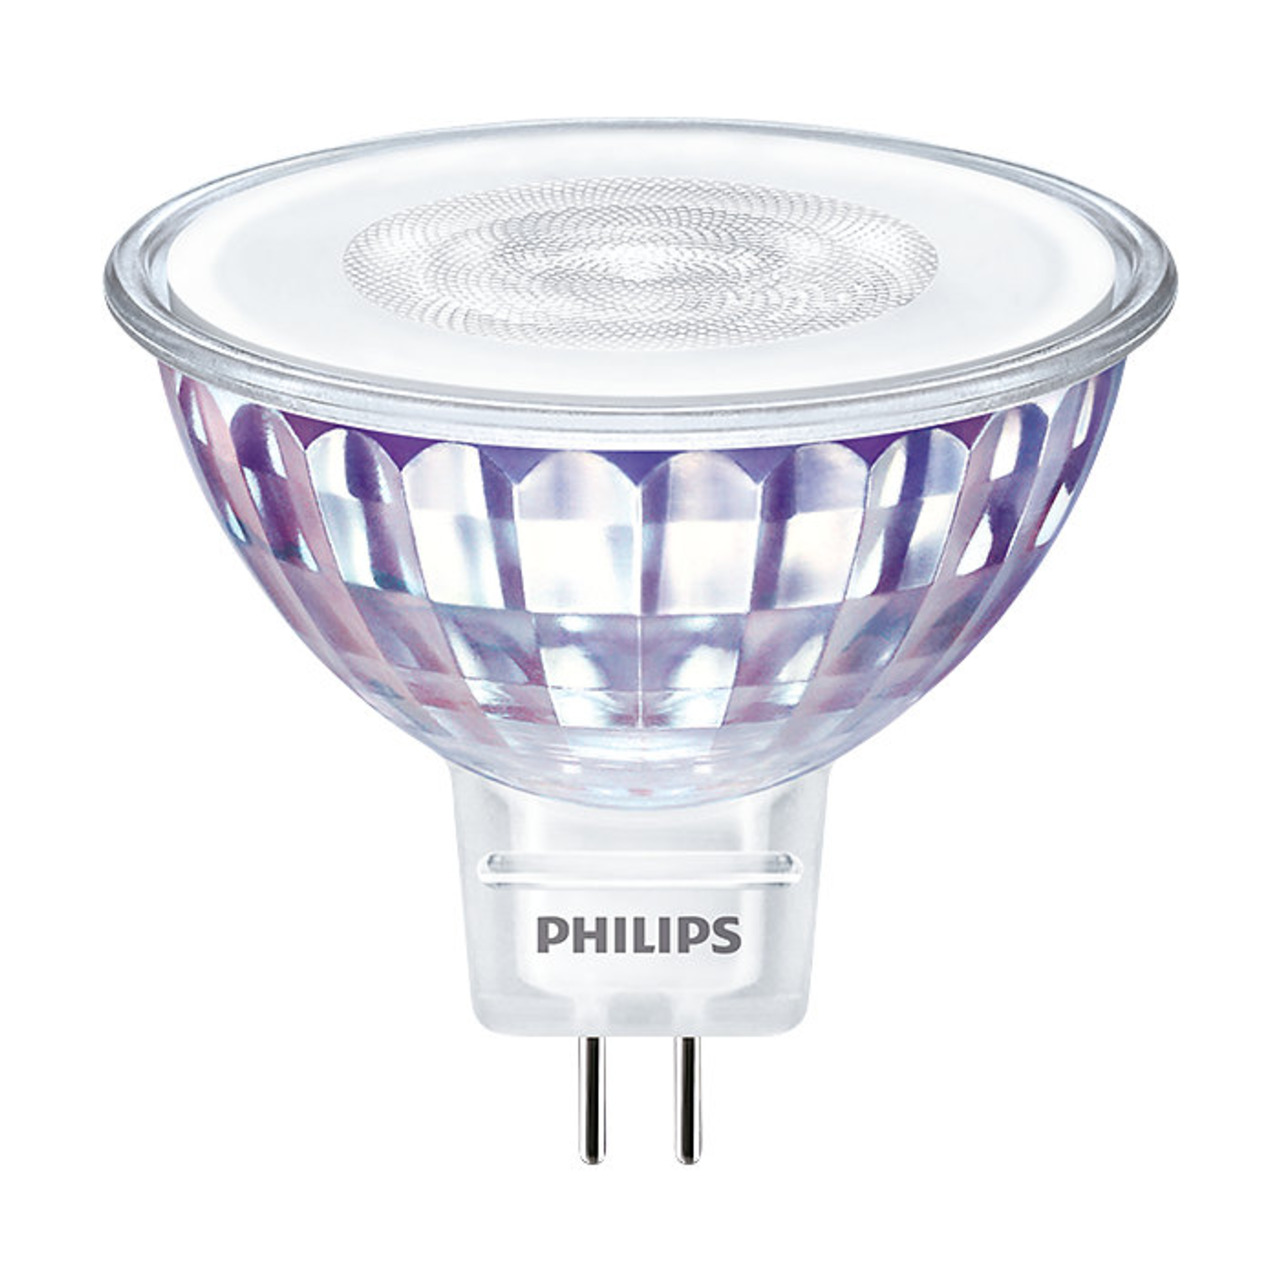 Philips 5-8-W-GU5-3-LED-Lampe Master LEDspot Value- MR16- 460 lm- warmweiss (3000 K)- 60- dimmbar unter Beleuchtung